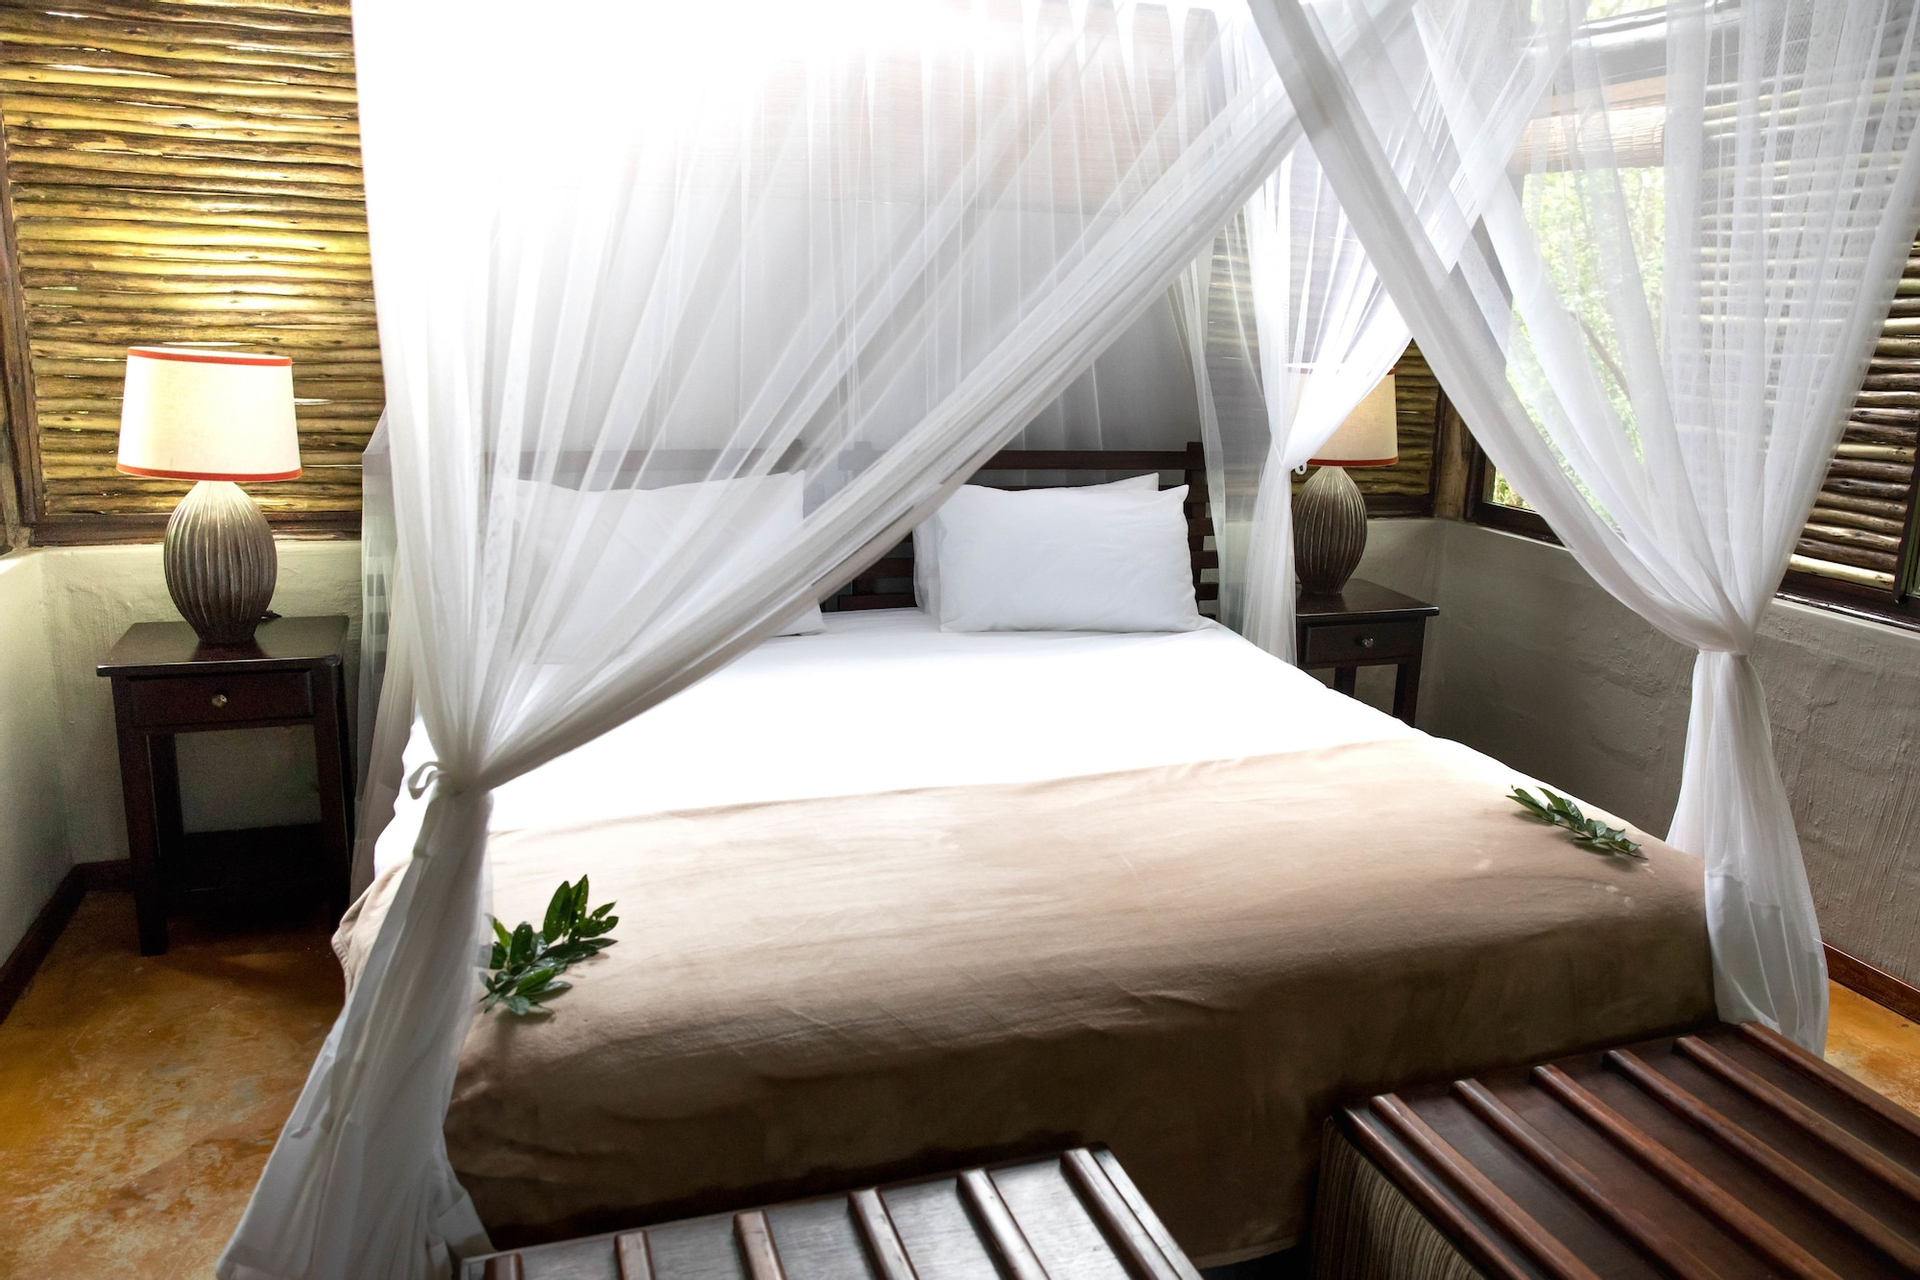 Bedroom 3, Royal Thonga Safari Lodge, Umkhanyakude